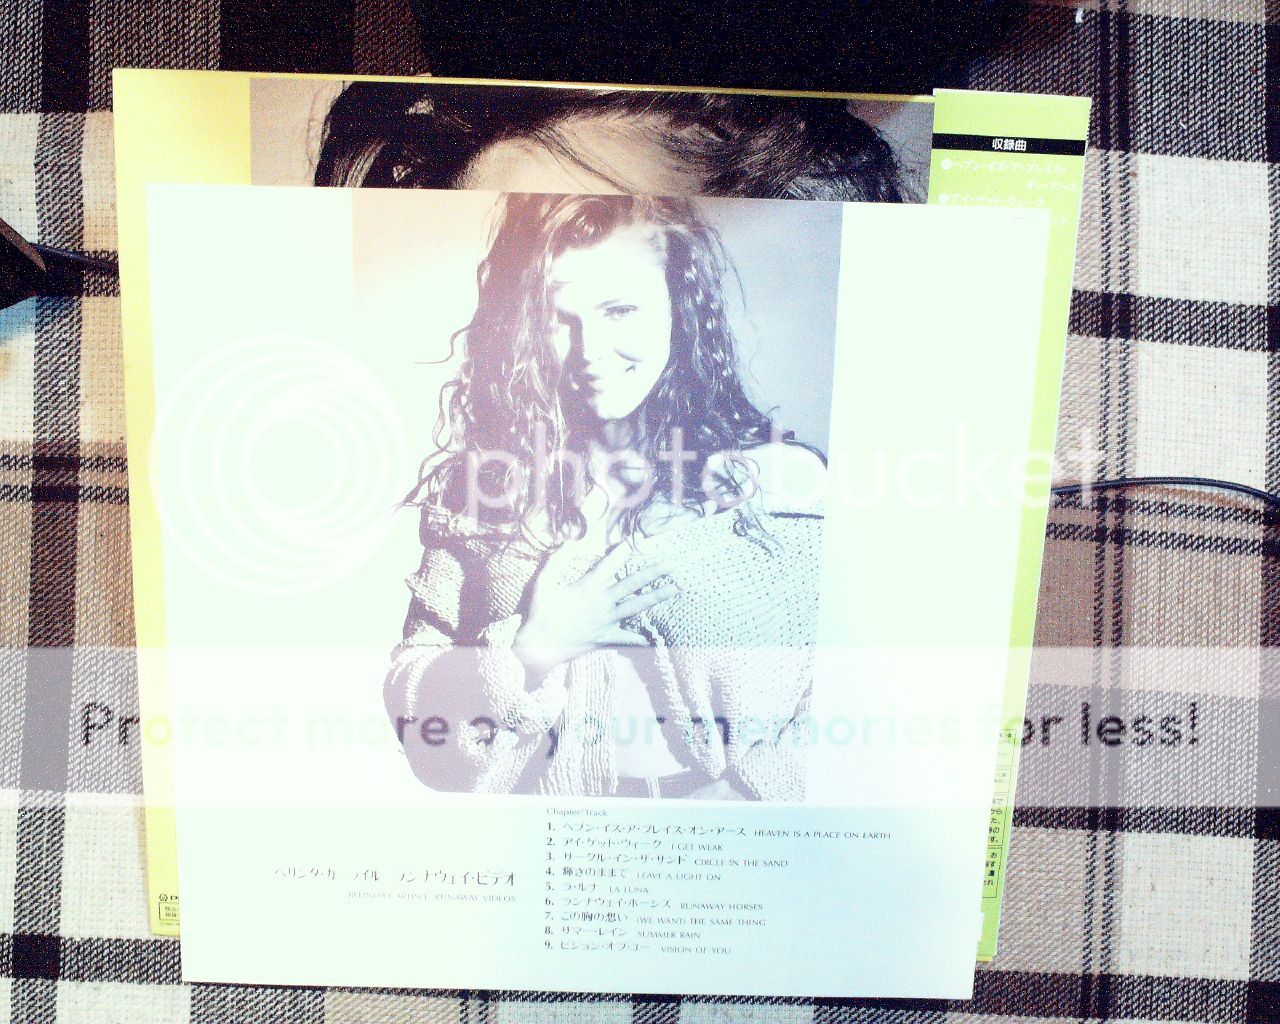 Belinda Carlisle Runaway Videos Laserdisc Japan LD PILP 1115